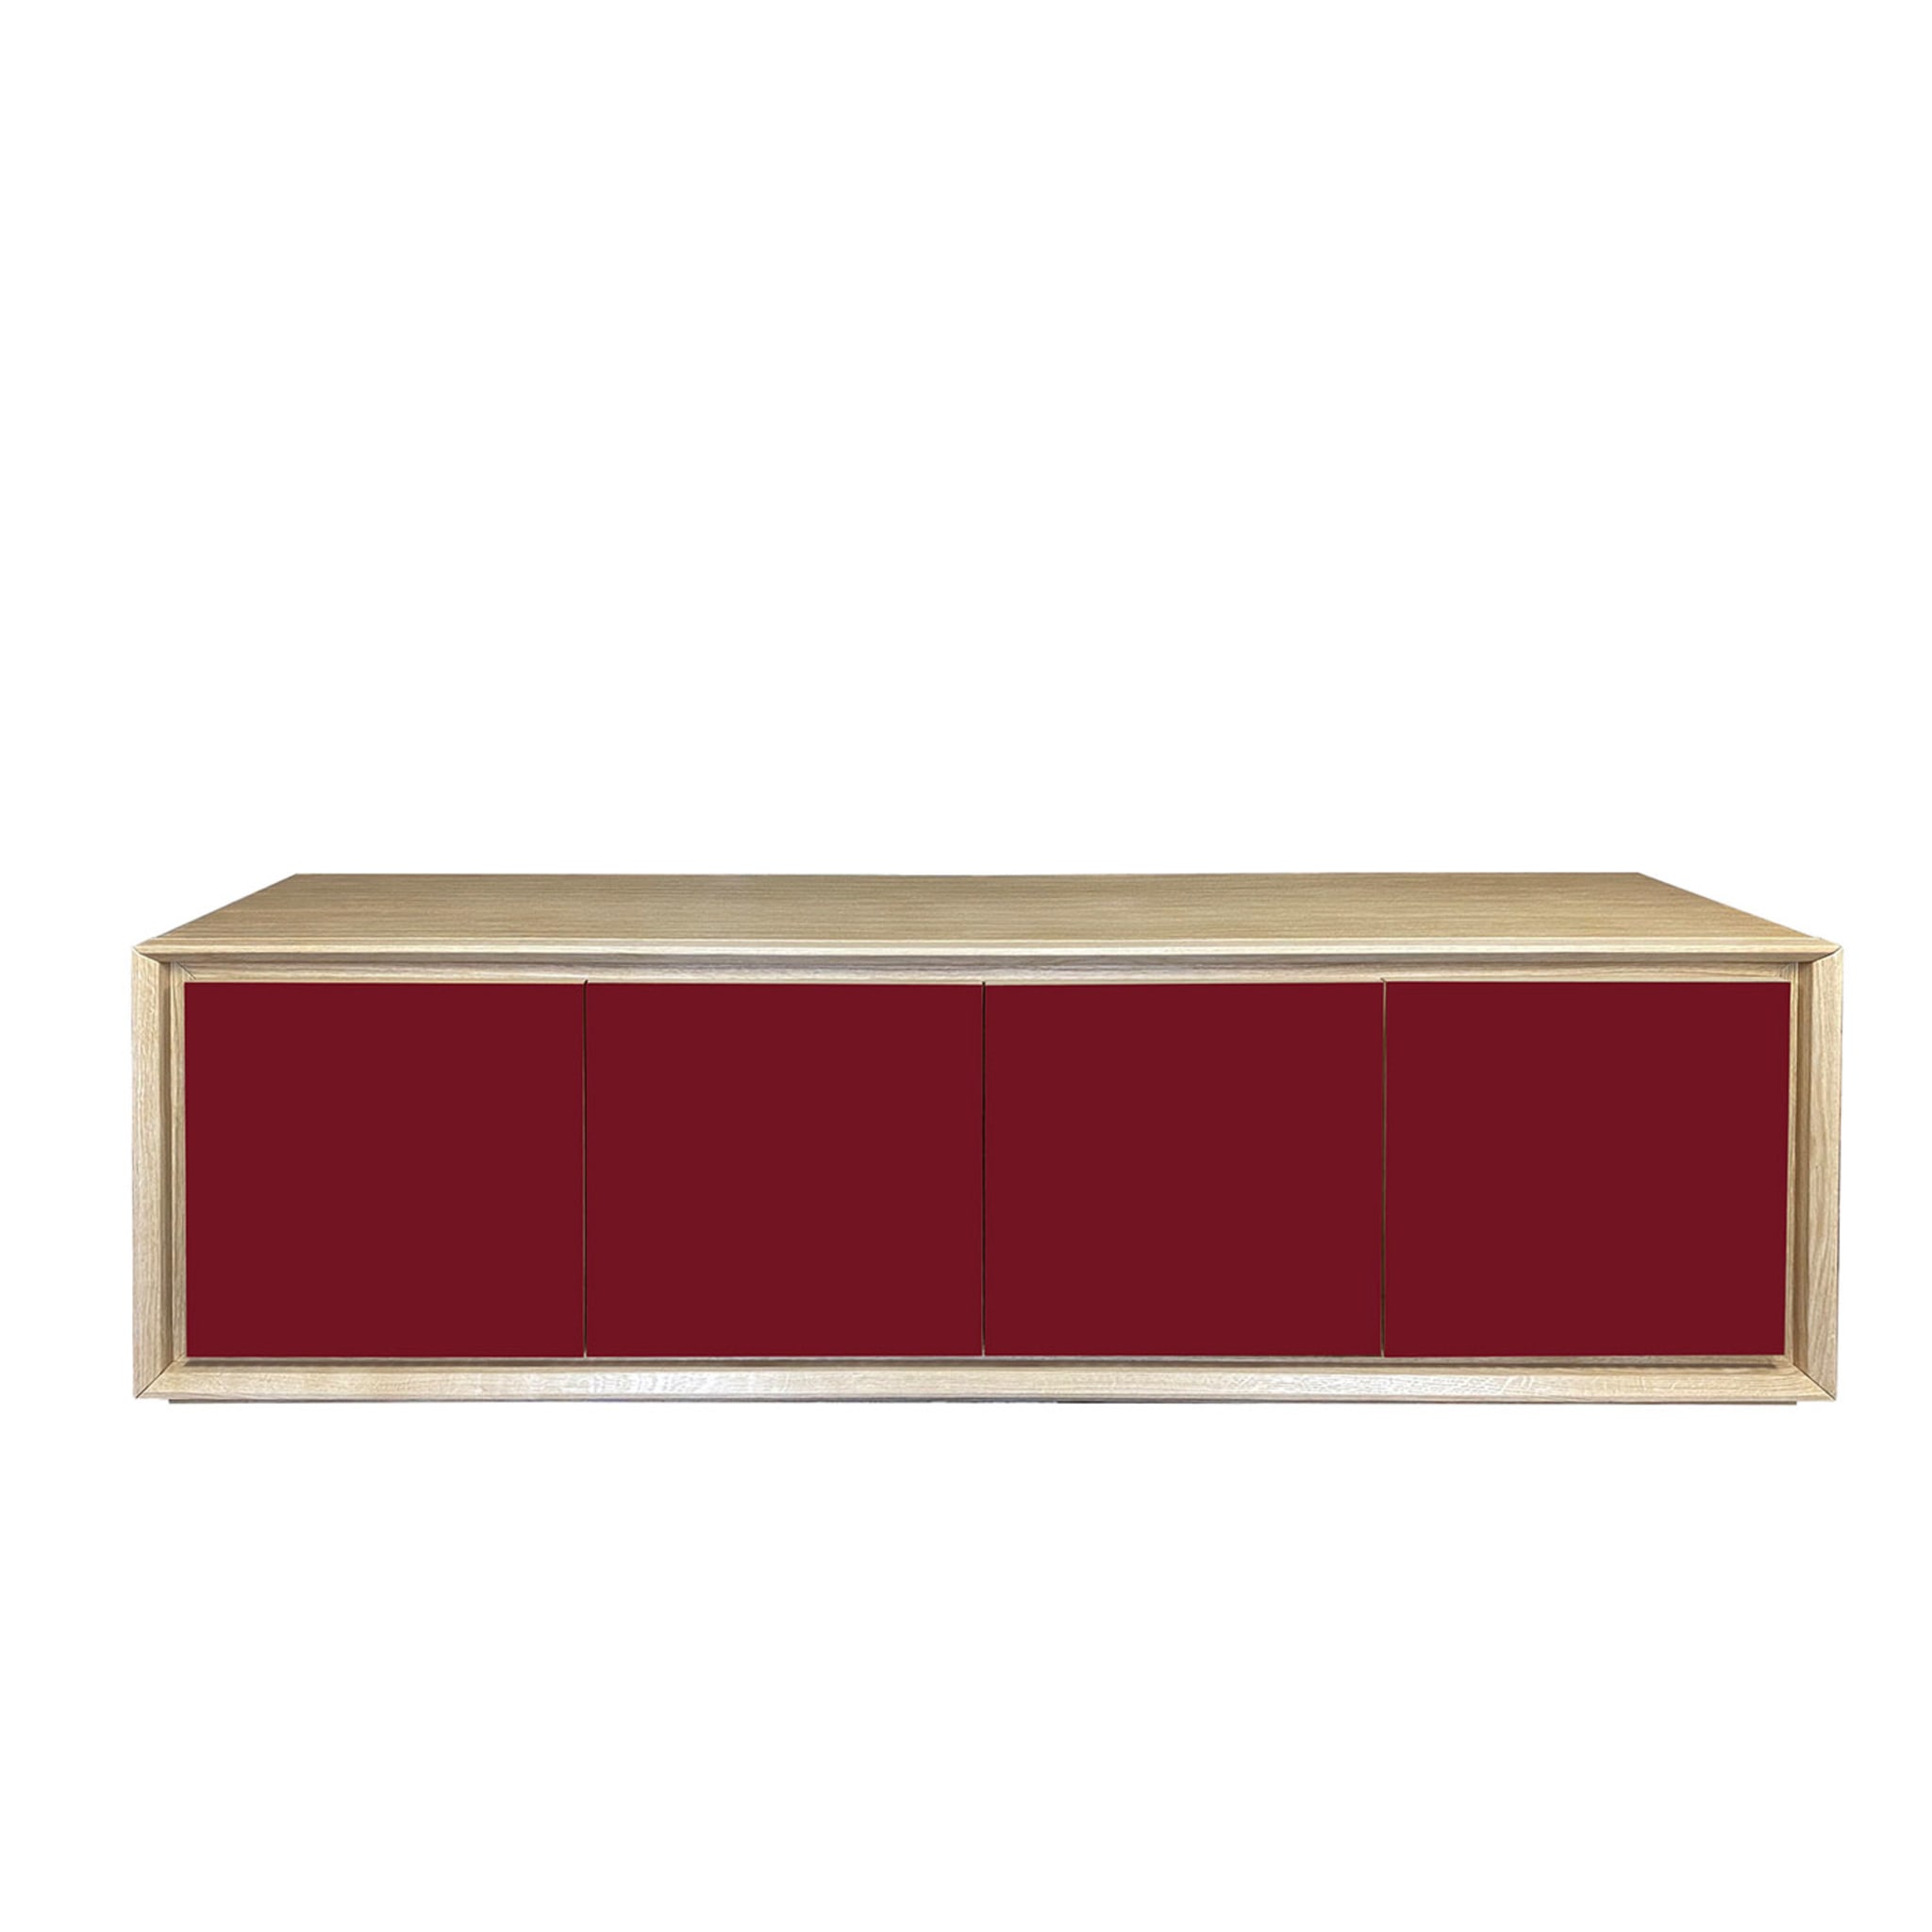 Rubino 3-türiges rubinrotes Sideboard von Mascia Meccani - Alternative Ansicht 1